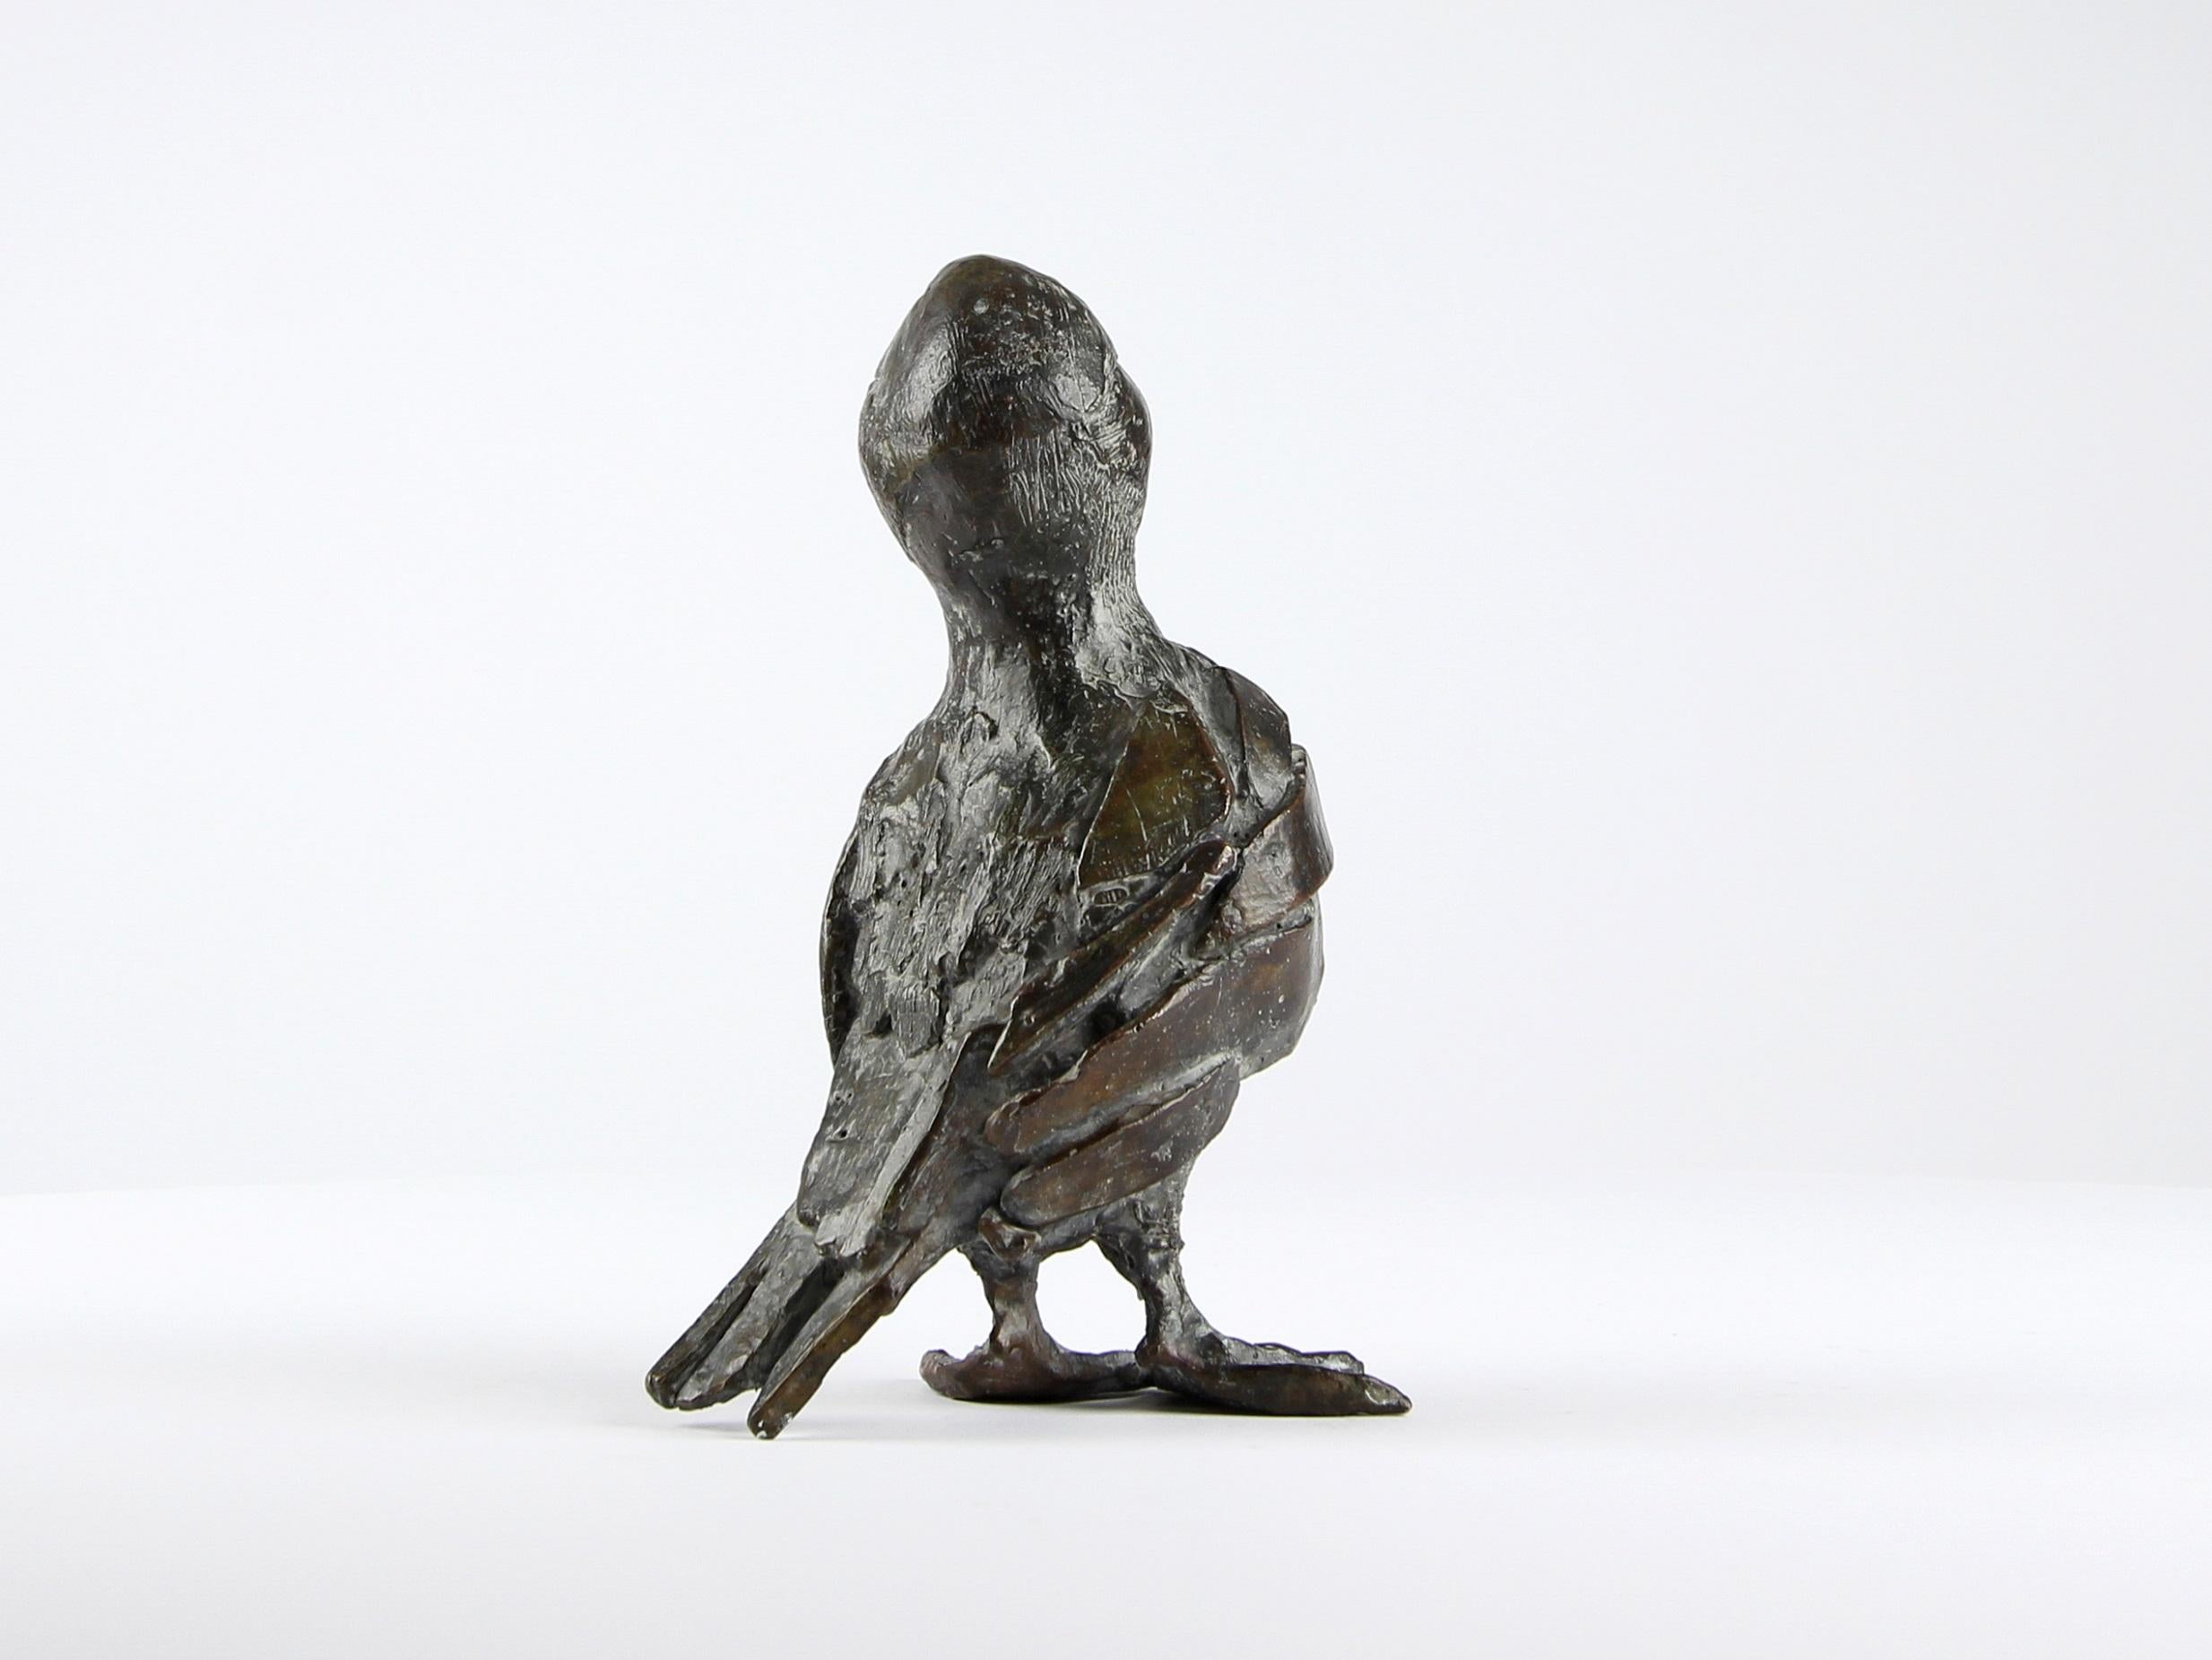 Puffin by Chésade - Bronze sculpture, animal art, expressionism, realism, bird For Sale 4